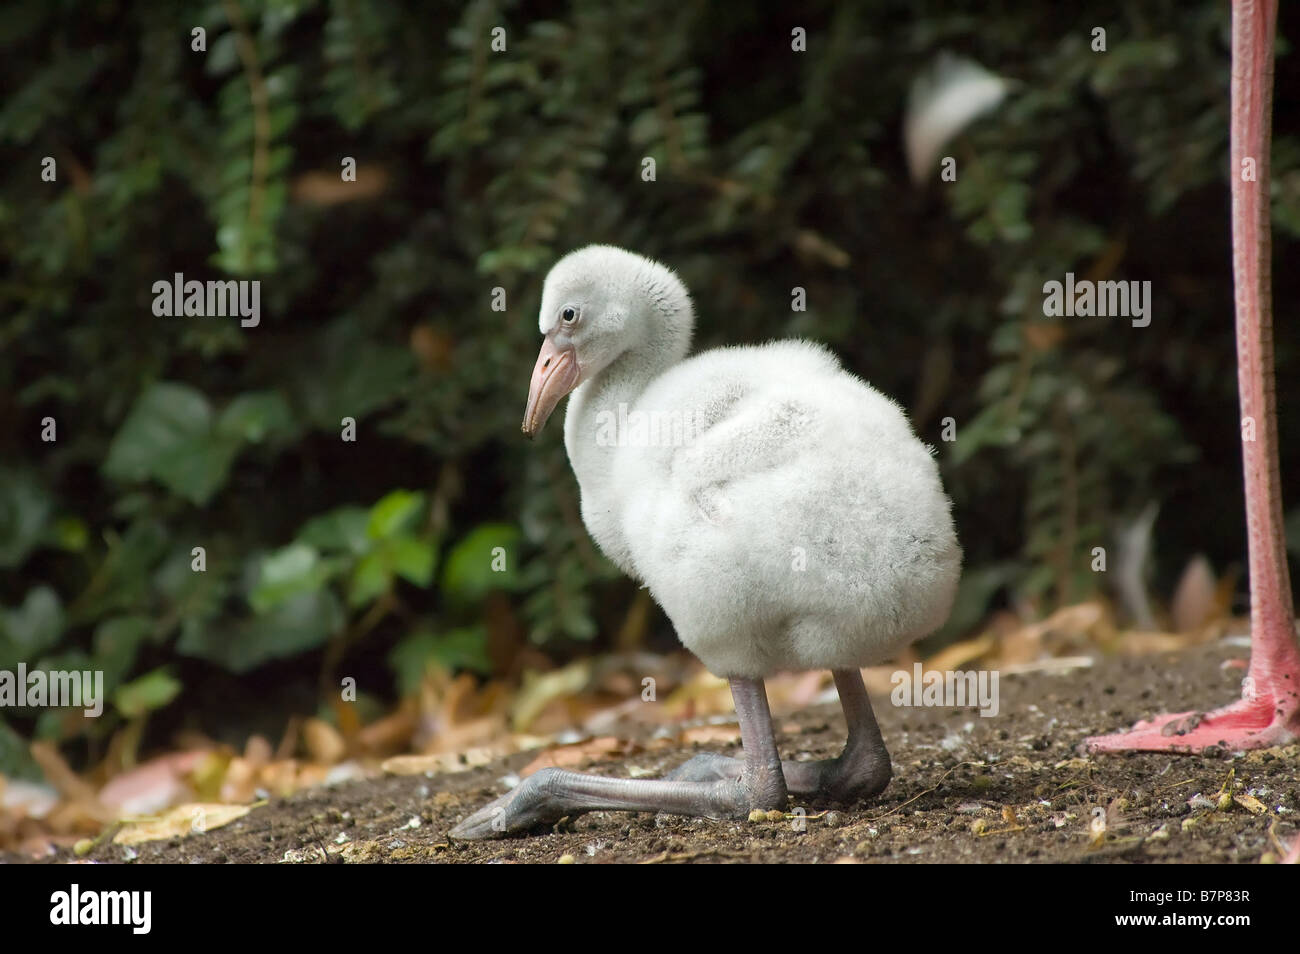 Baby flamingo -Fotos und -Bildmaterial in hoher Auflösung – Alamy